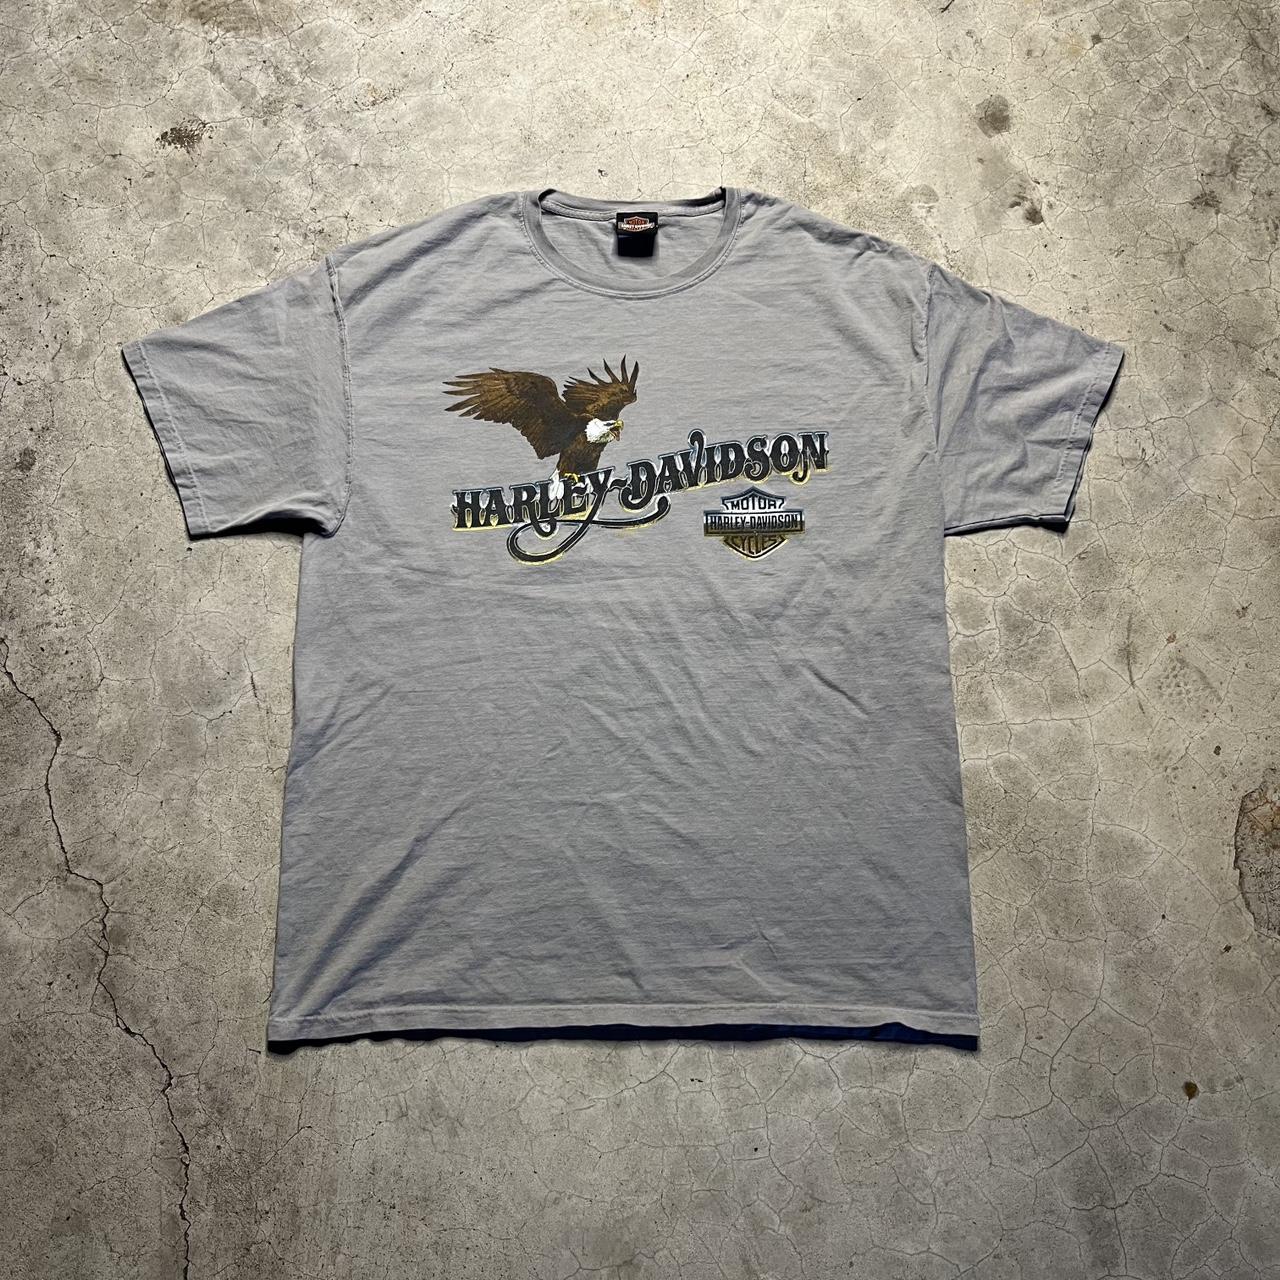 Harley Davidson Men's Grey and Brown T-shirt